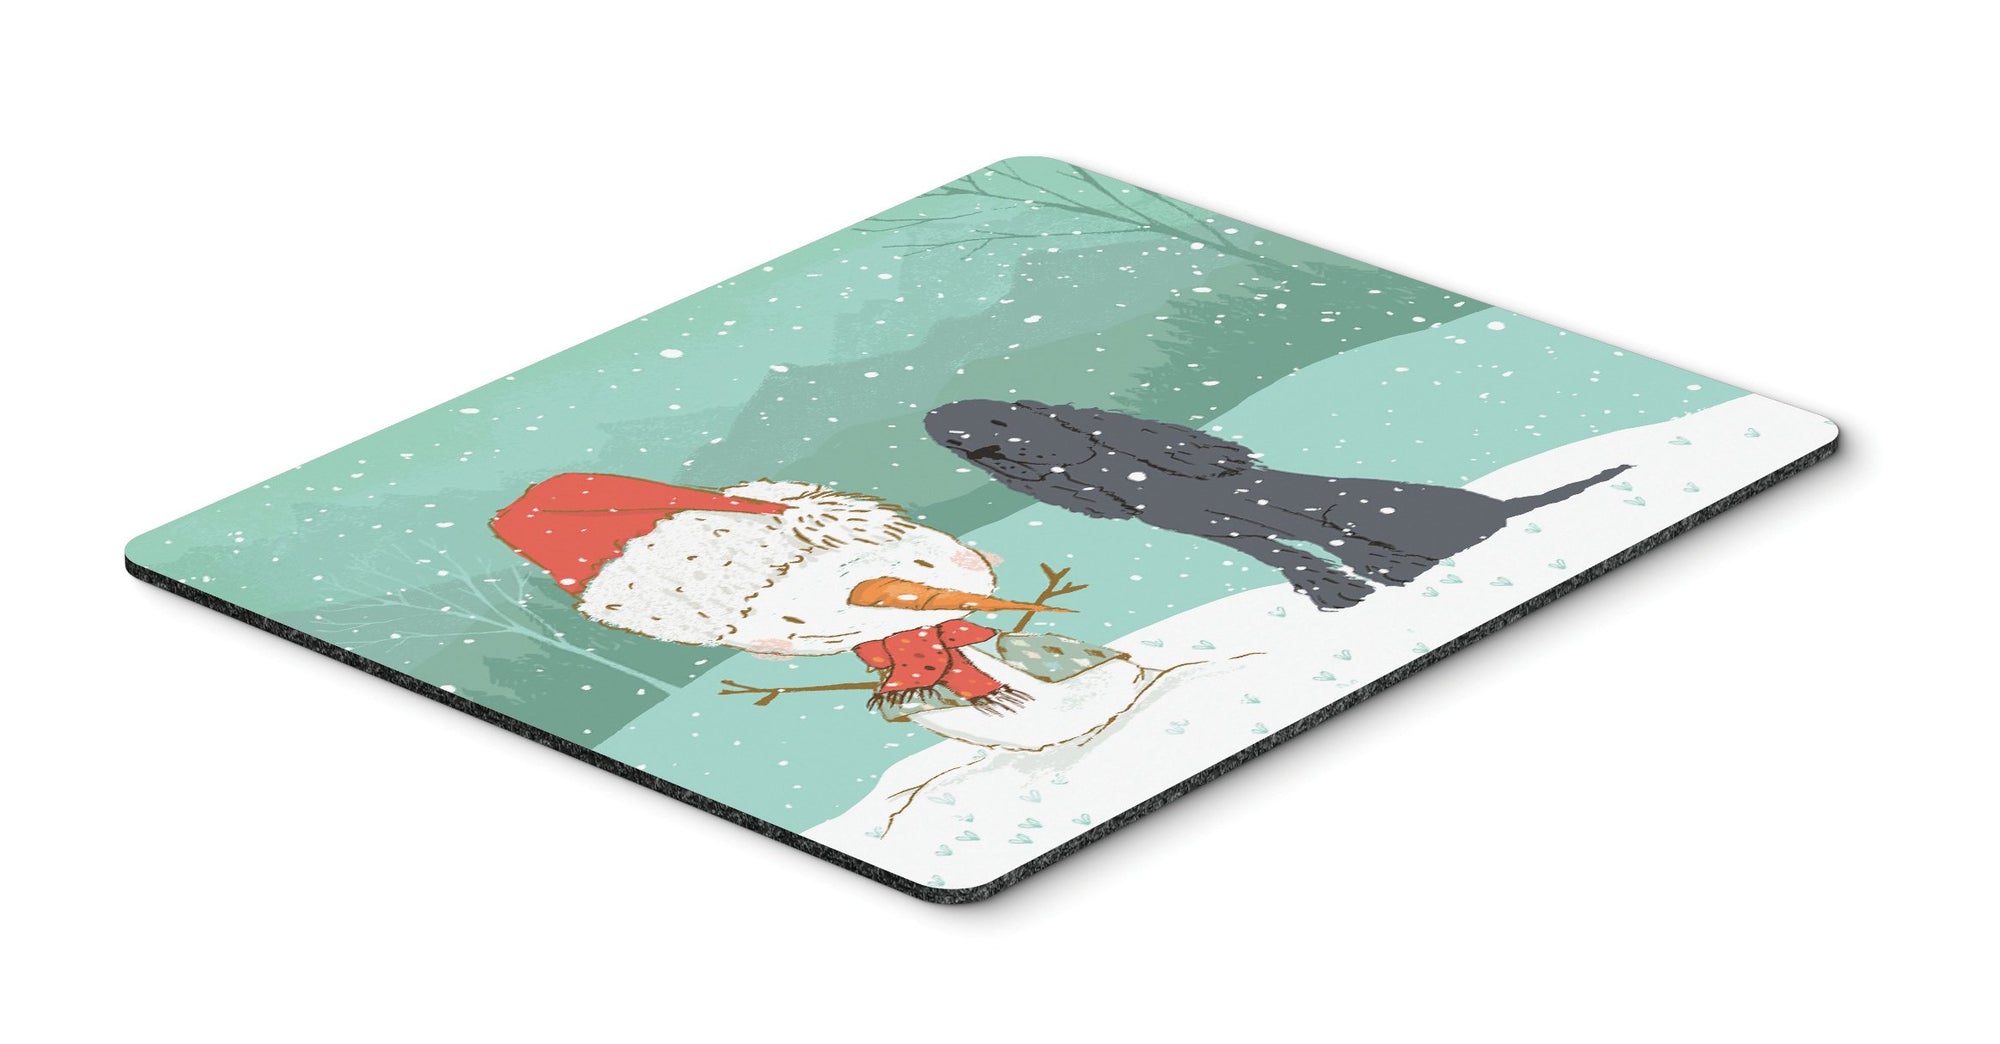 Black Spaniel Snowman Christmas Mouse Pad, Hot Pad or Trivet CK2070MP by Caroline's Treasures